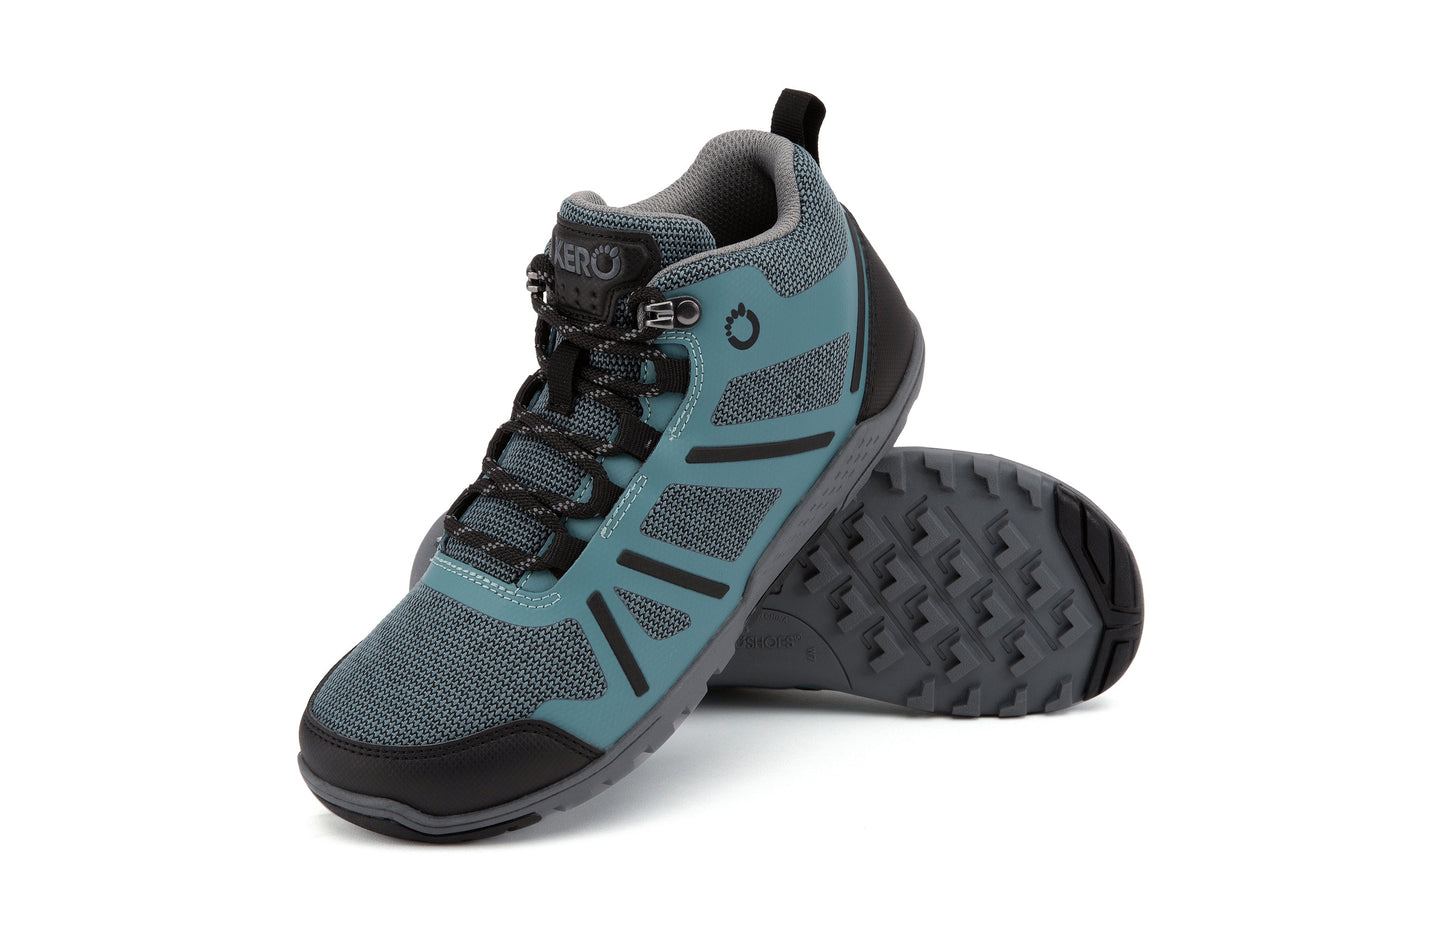 Xero Shoes Daylite Hiker Fusion Womens barfods vandrestøvler til kvinder i farven arctic blue / asphalt, par